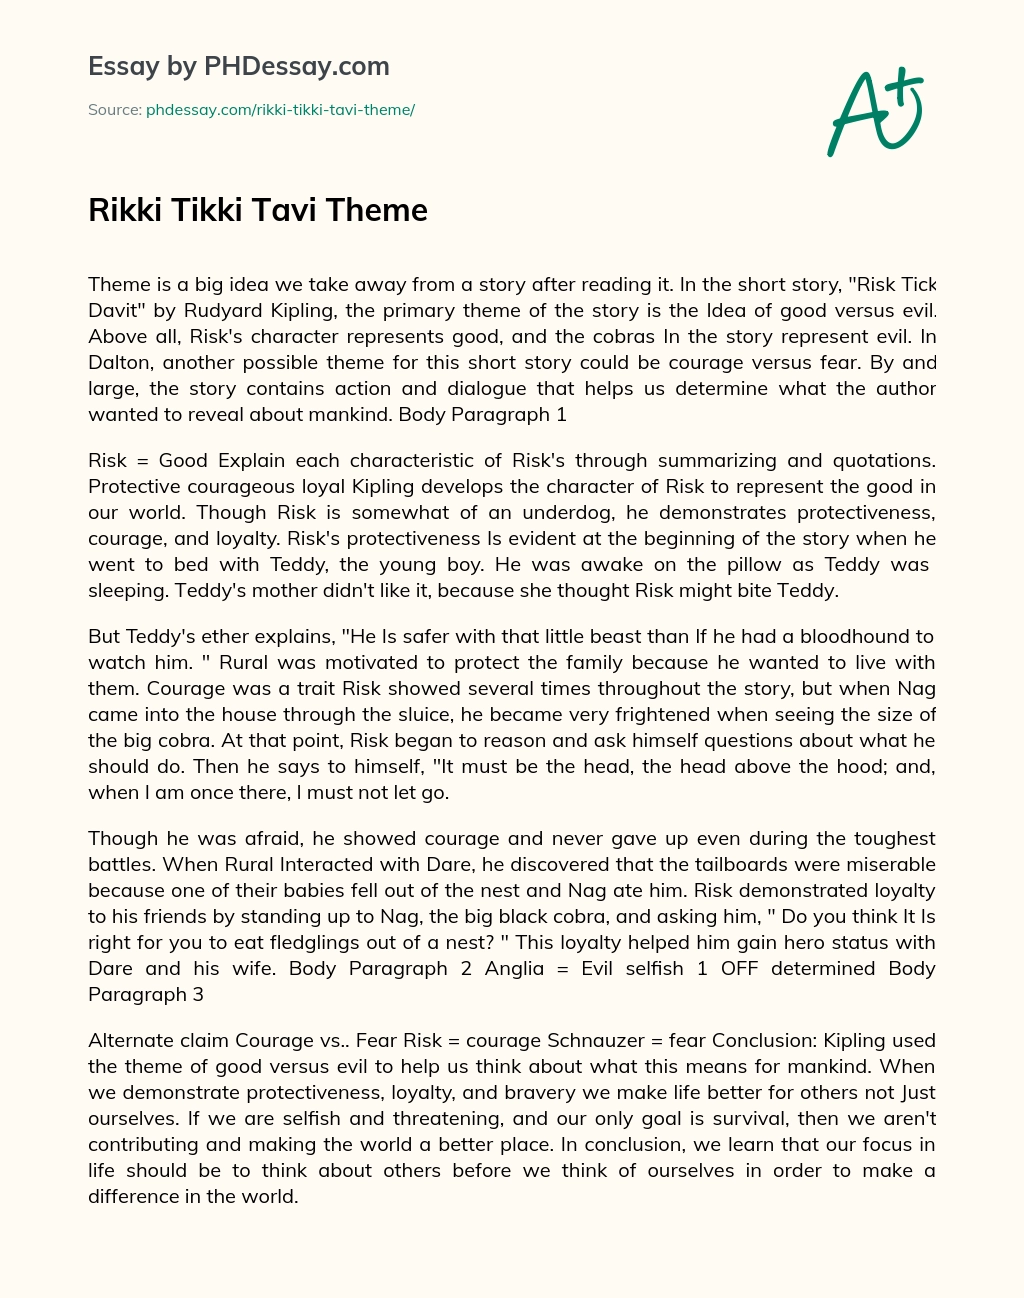 Rikki Tikki Tavi Theme essay